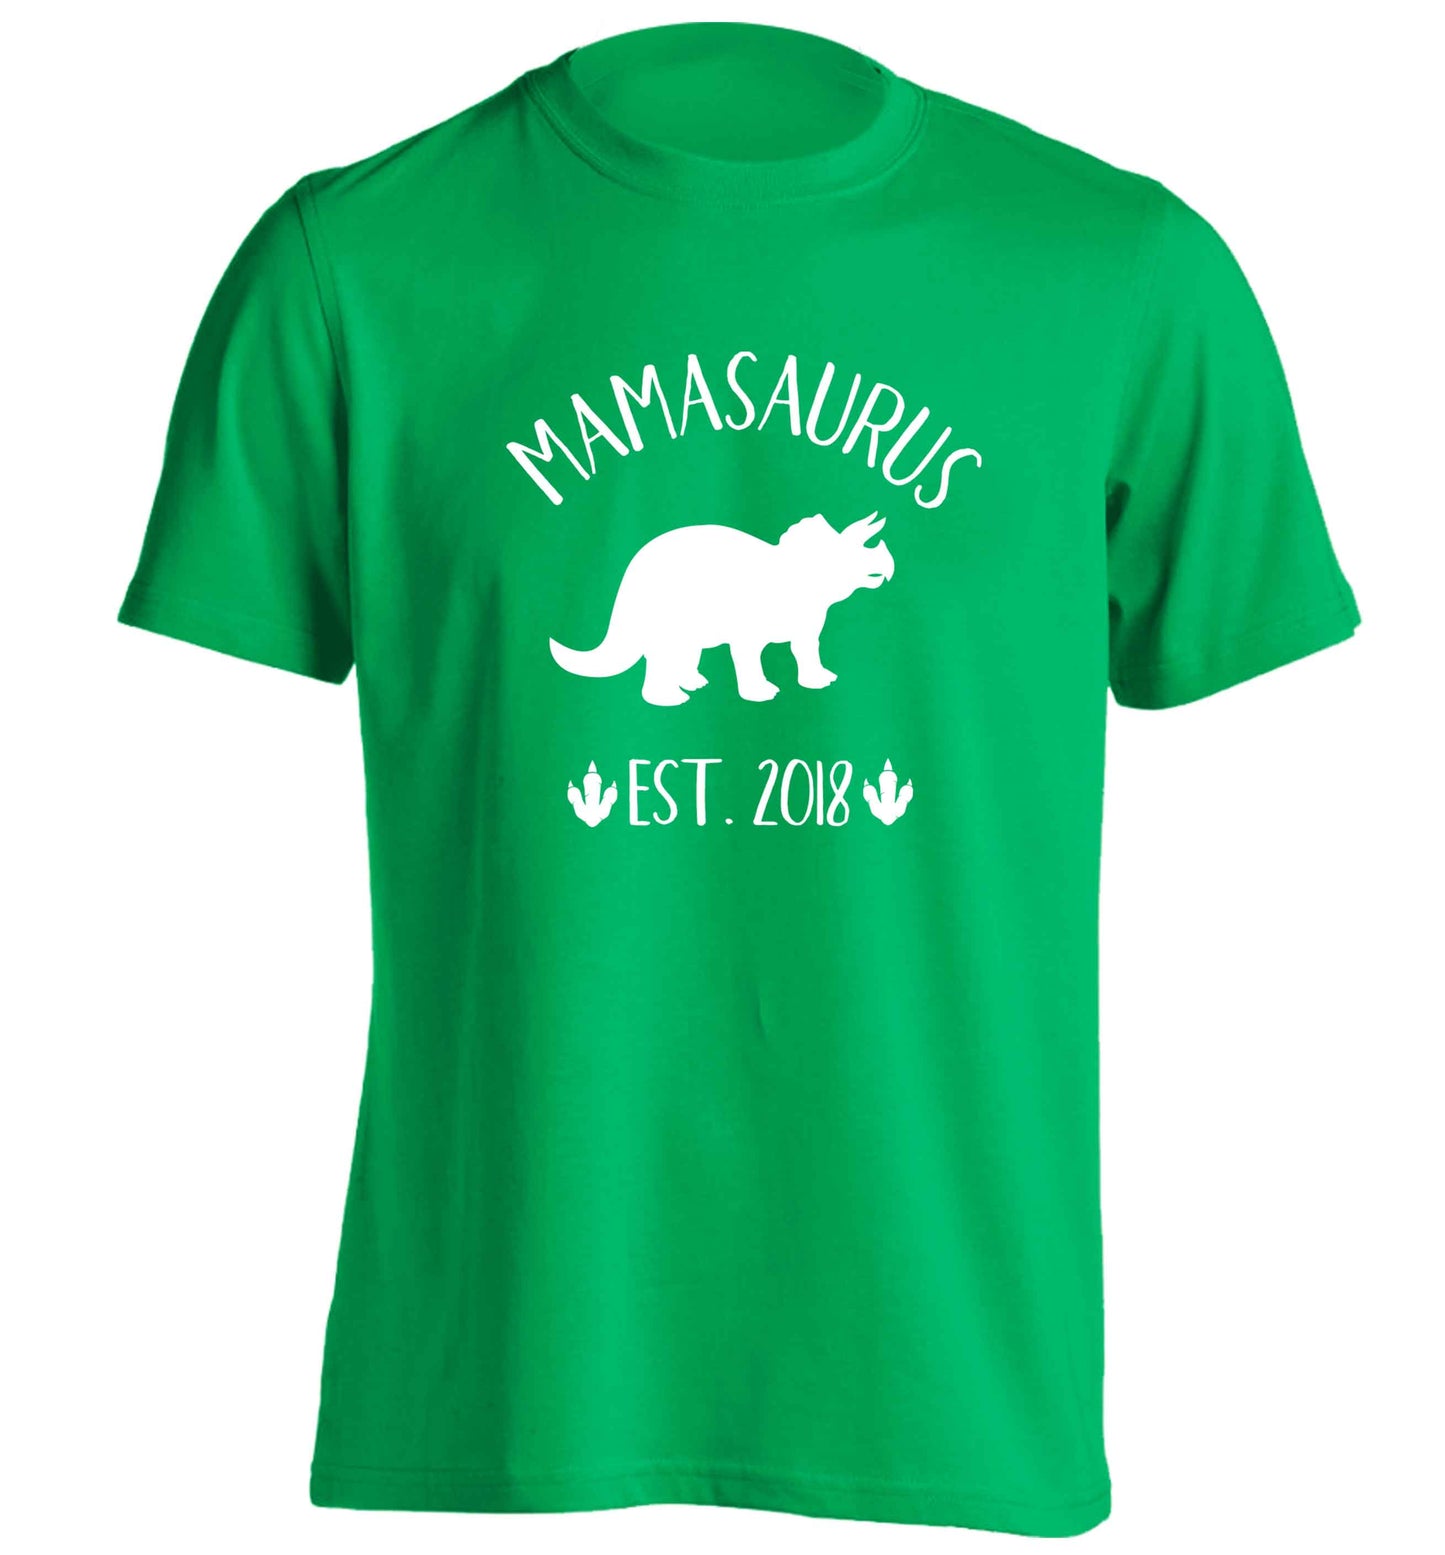 Personalised mamasaurus date adults unisex green Tshirt small